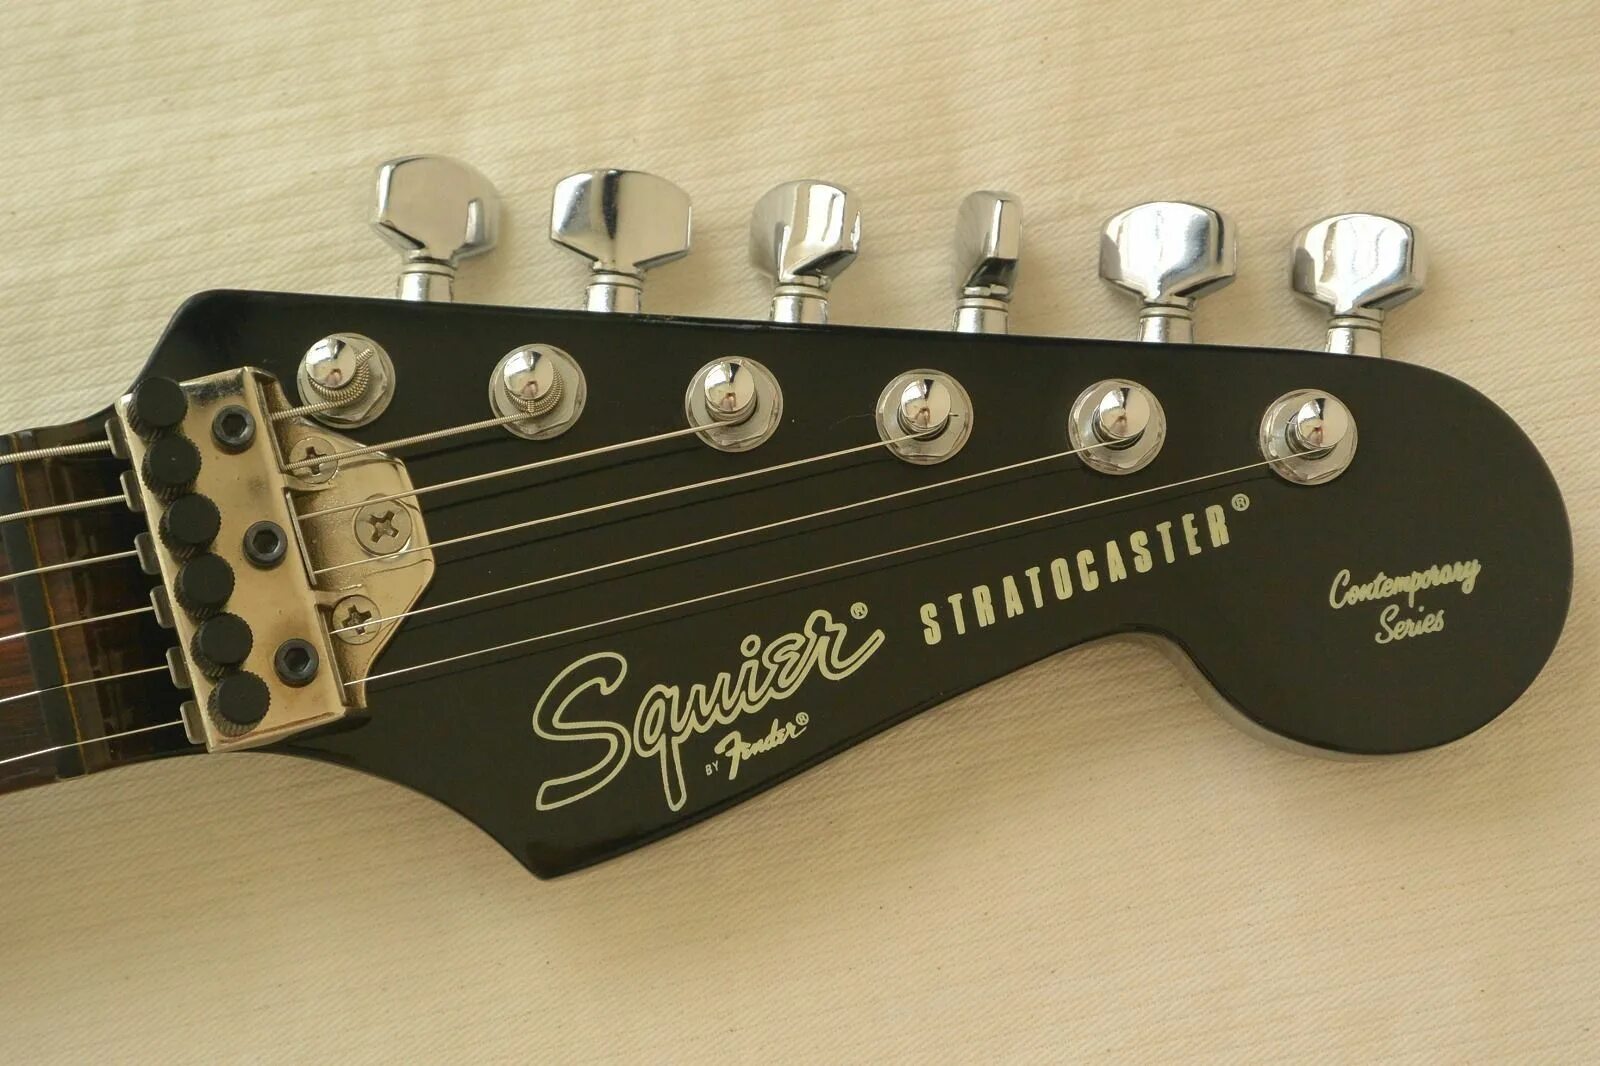 Фендер стратокастер Контемпорари. Фендер скваер 2002. Squier by Fender Contemporary Series 1983.